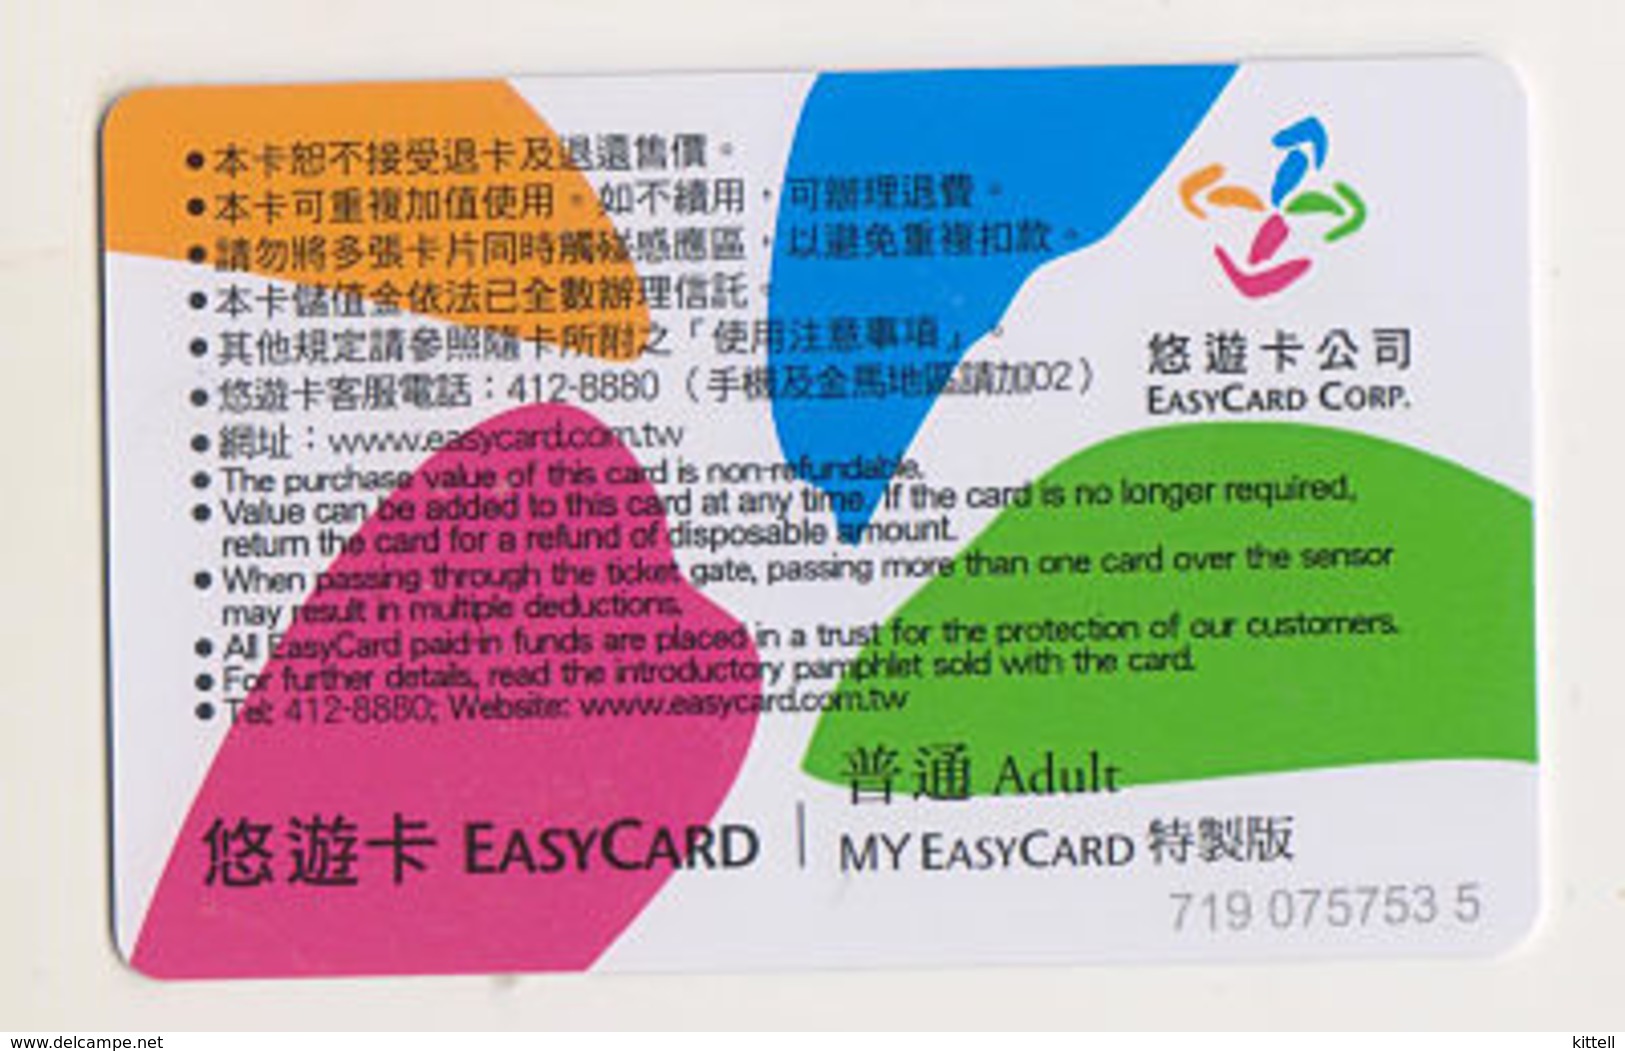 Taiwan Taipei Metro Subway Ticket Farecard Used (plastic) - Monde